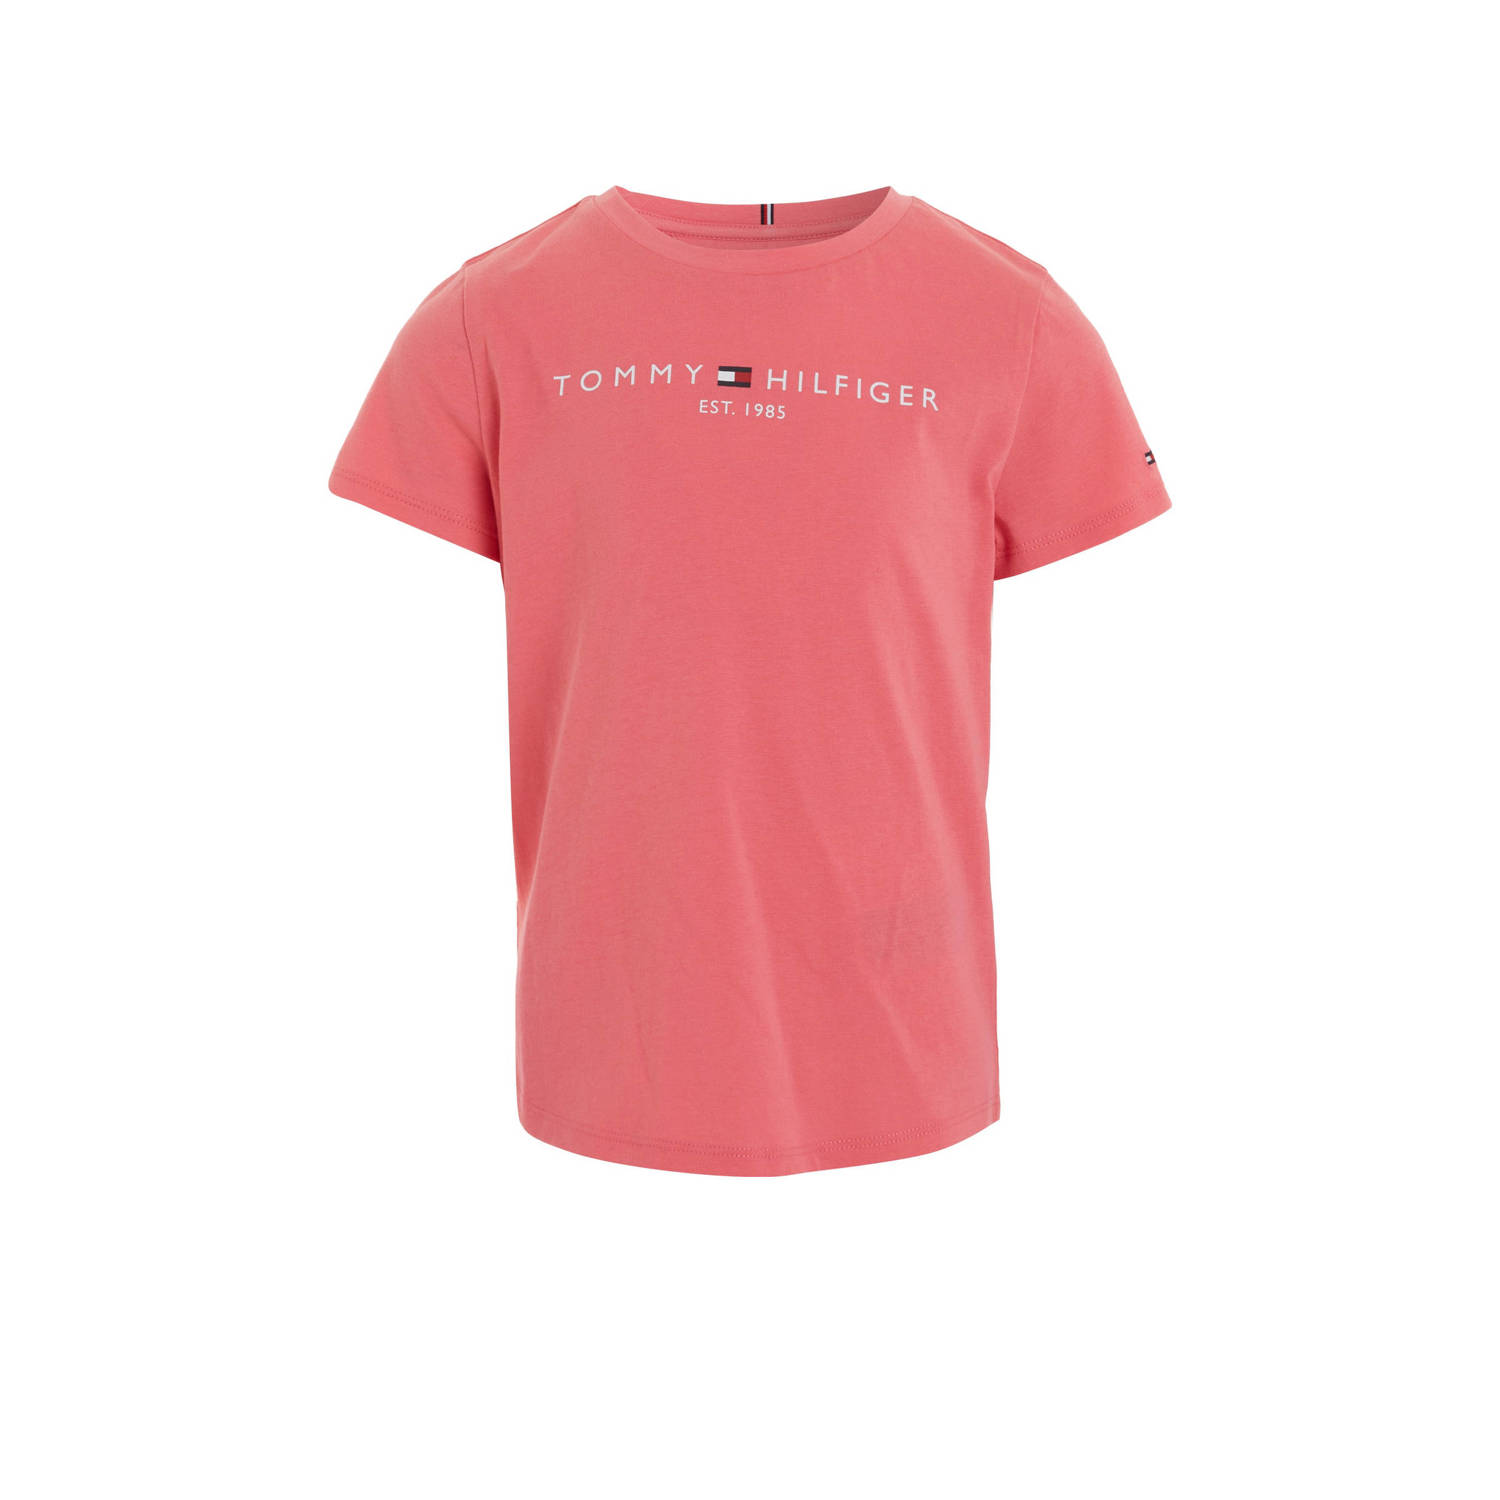 Tommy Hilfiger T-shirt met logo roze